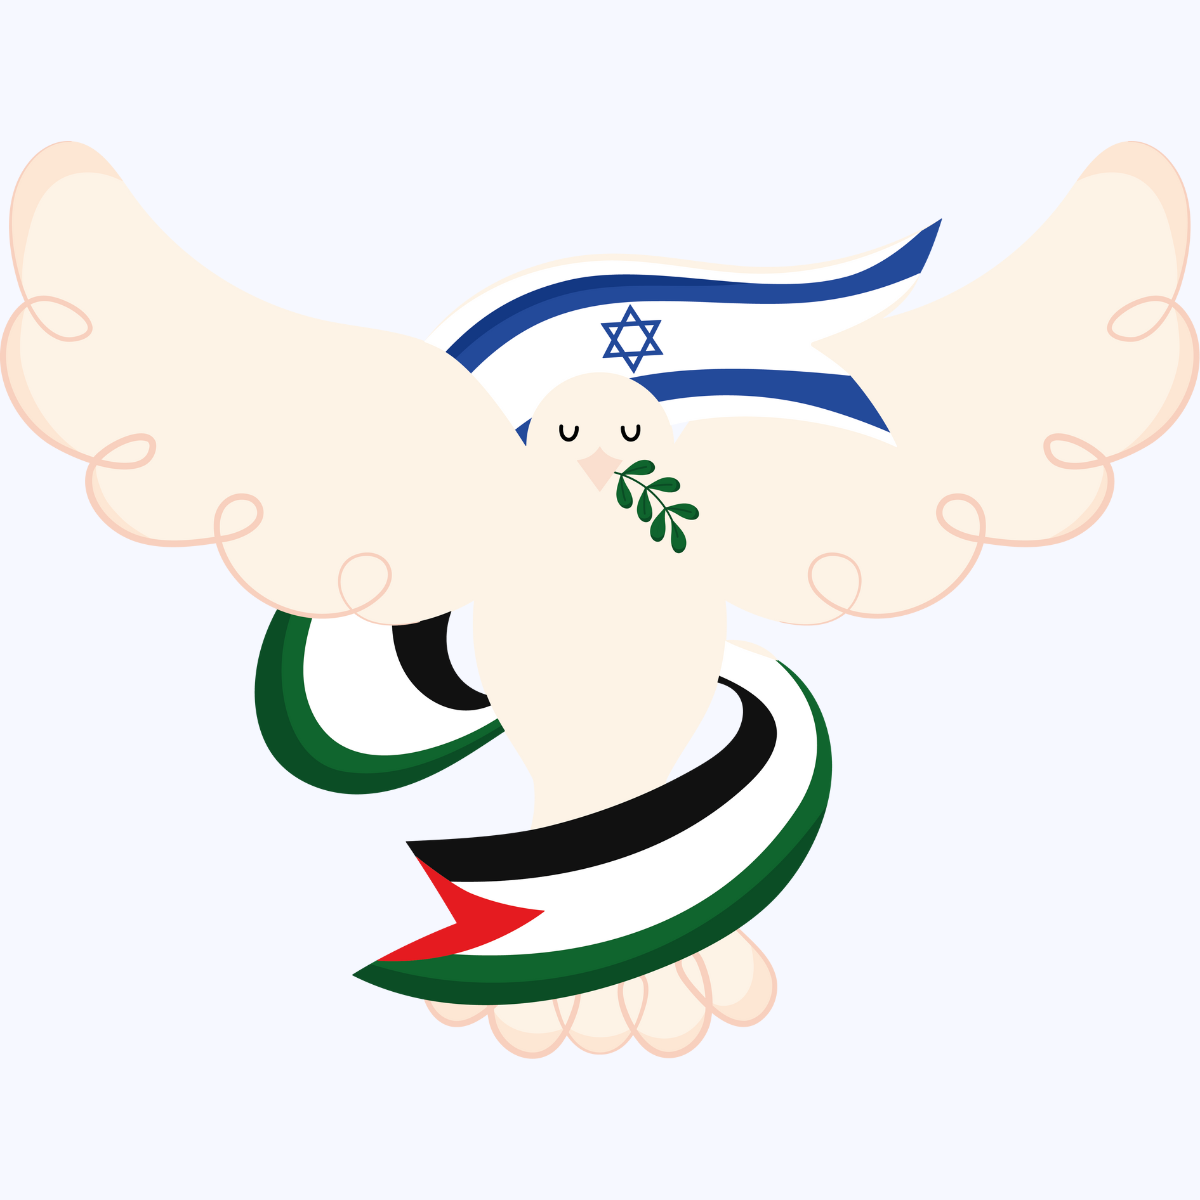 Peace between Israel and Palestine